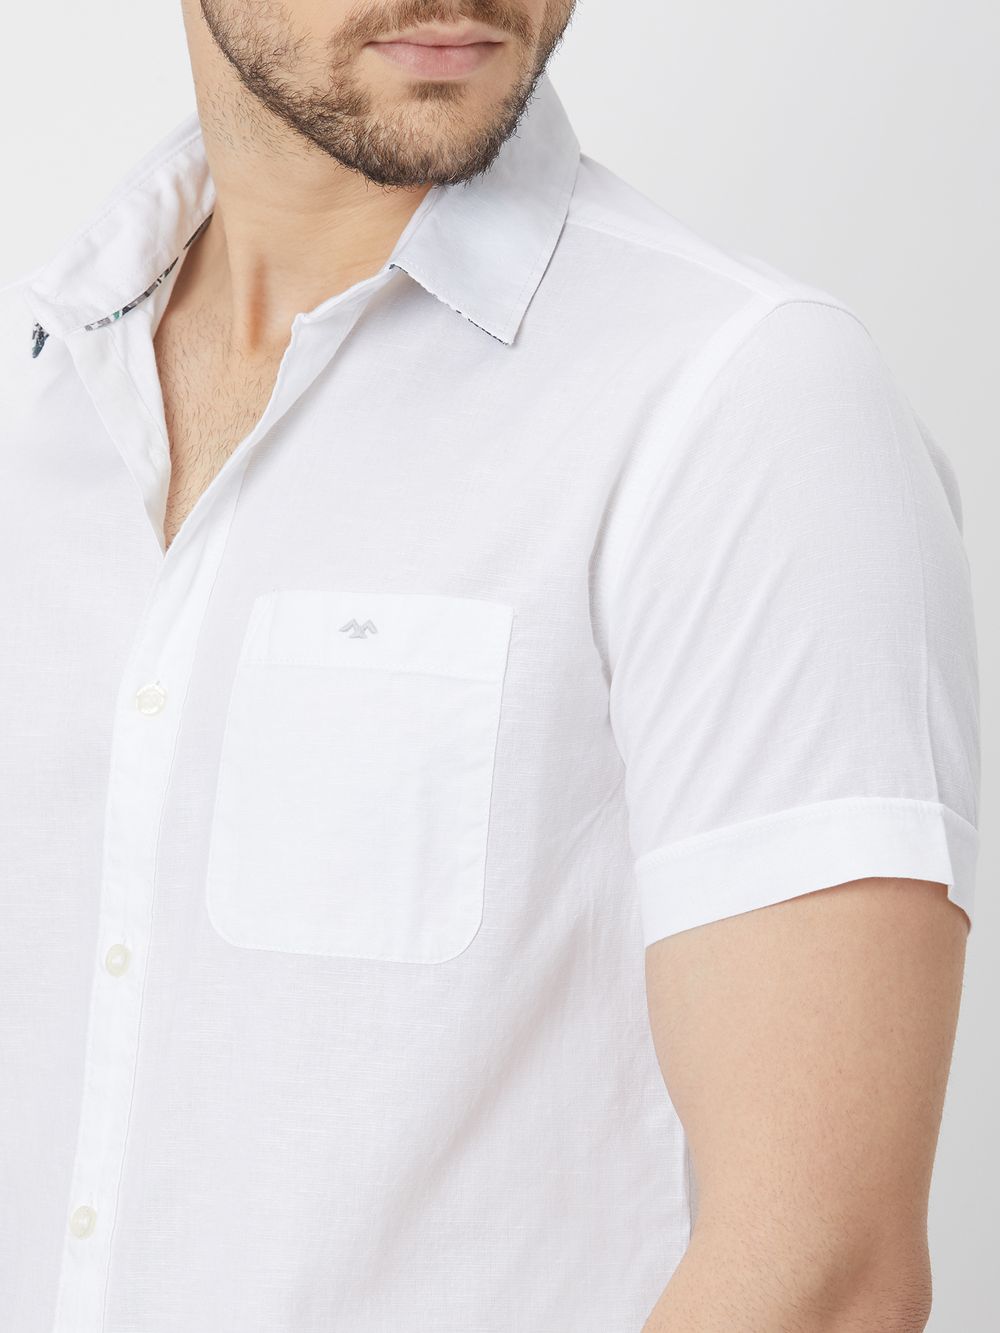 White Cotton Linen Plain Shirt